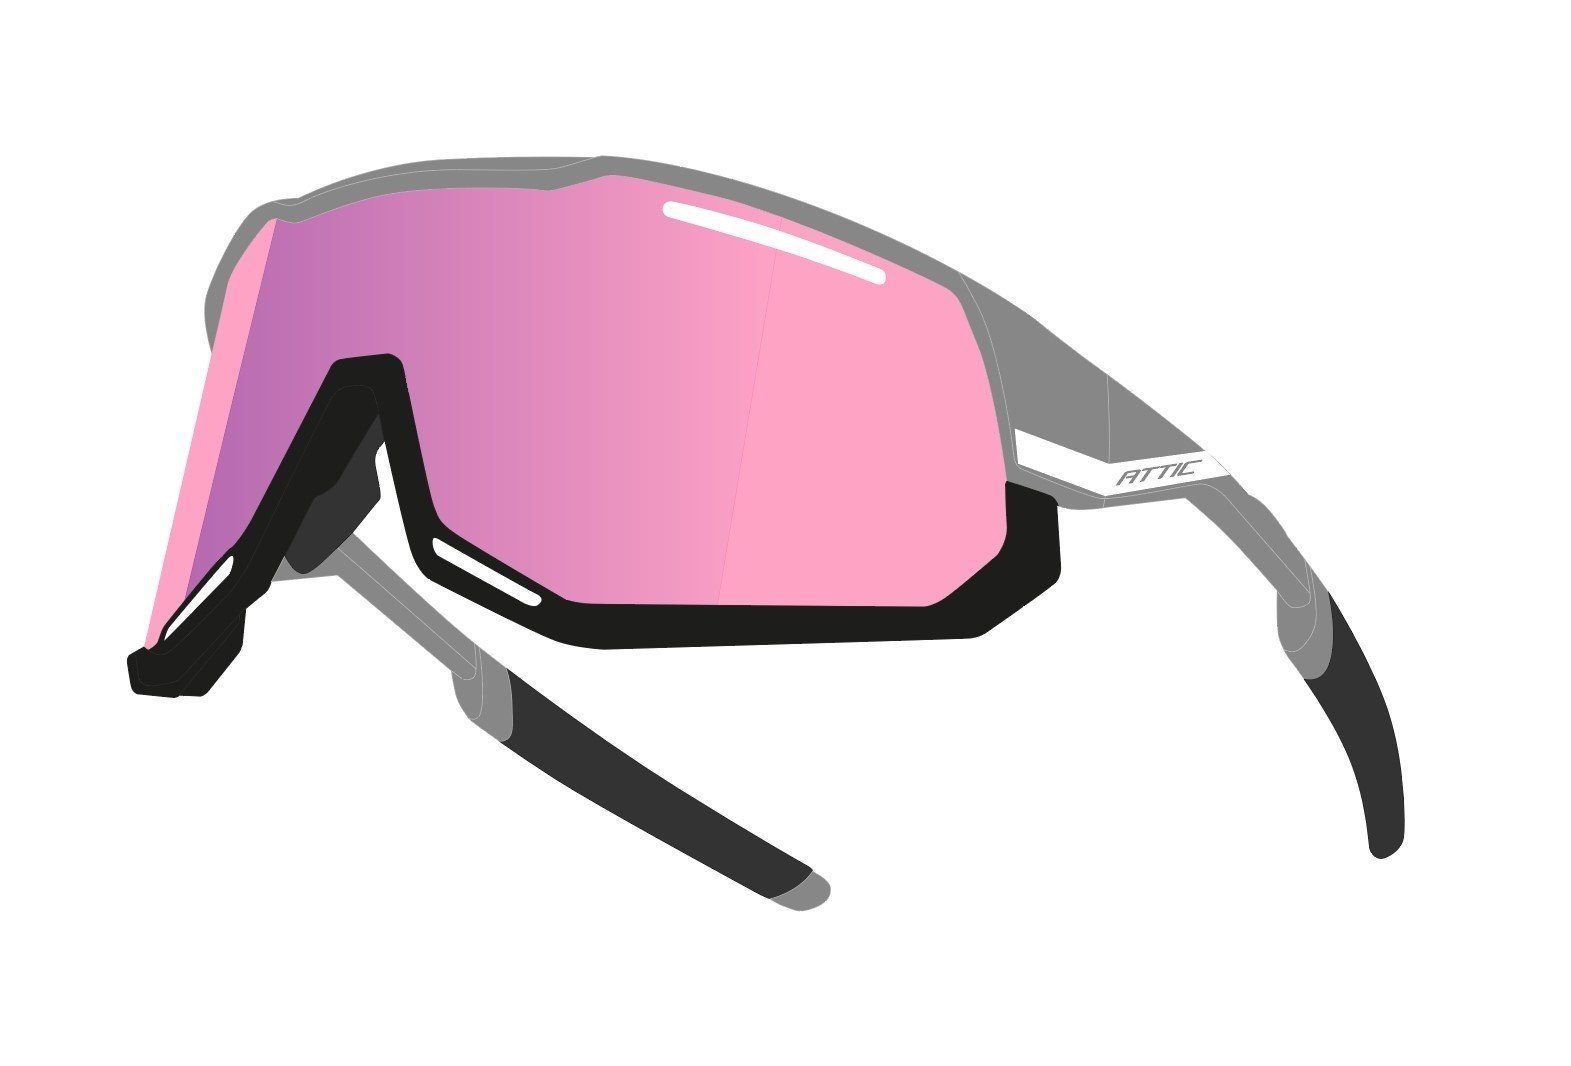 Angebotspreis FORCE Fahrradbrille Sonnenbrille F rosa Kontrast grau-schwarz ATTIC